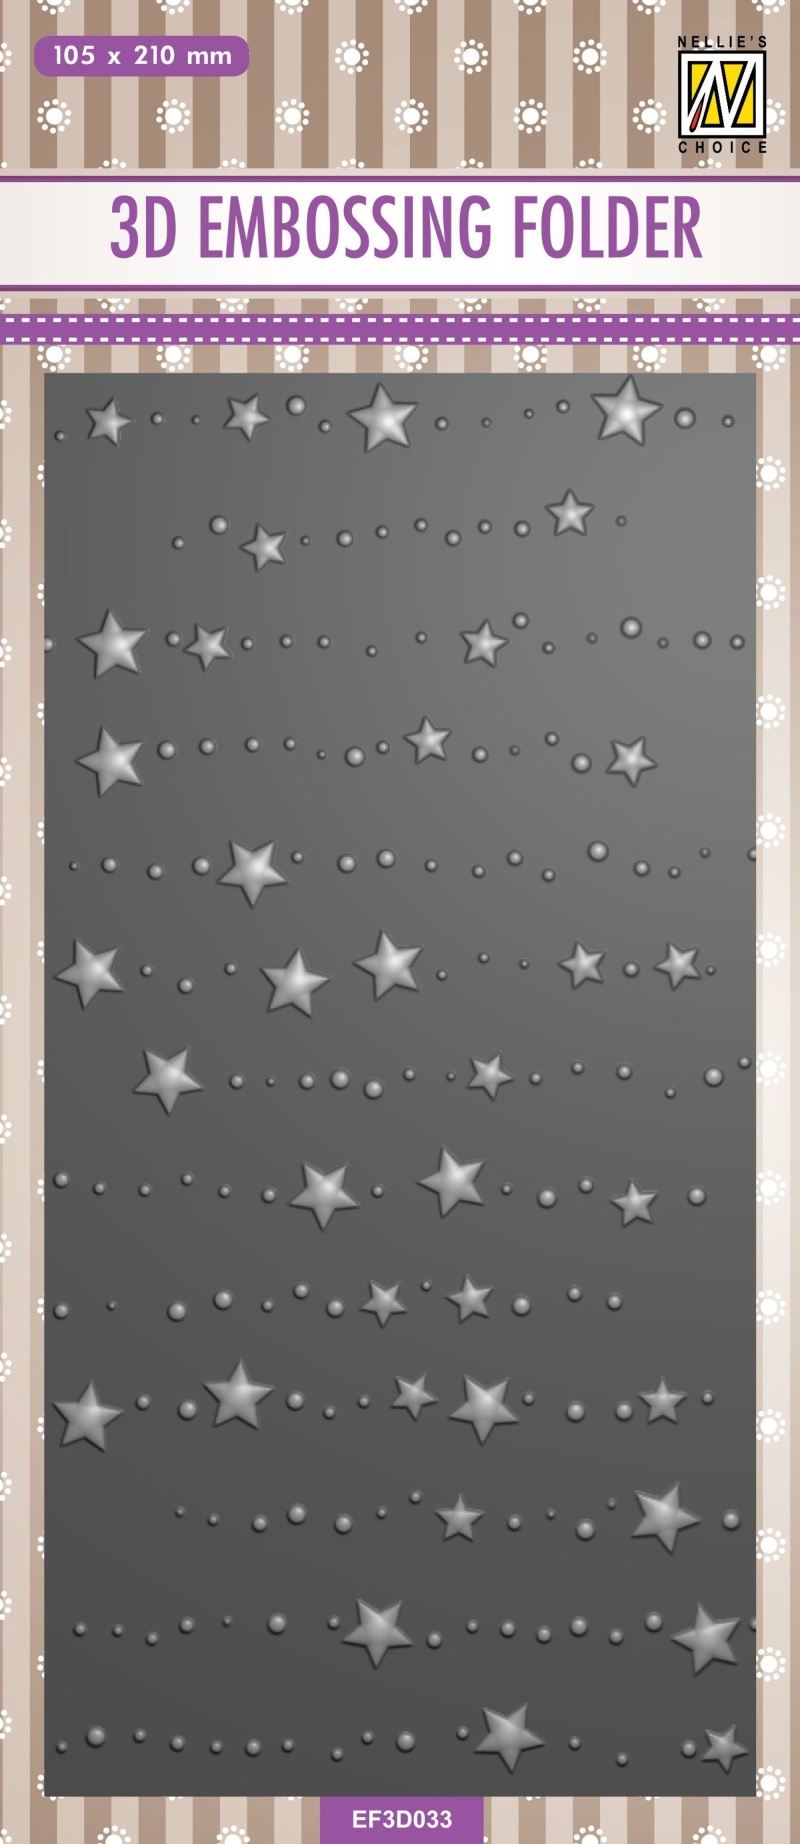 Nellie's Choice 3D Embossing Folder Slimline Size - Stars & Dots